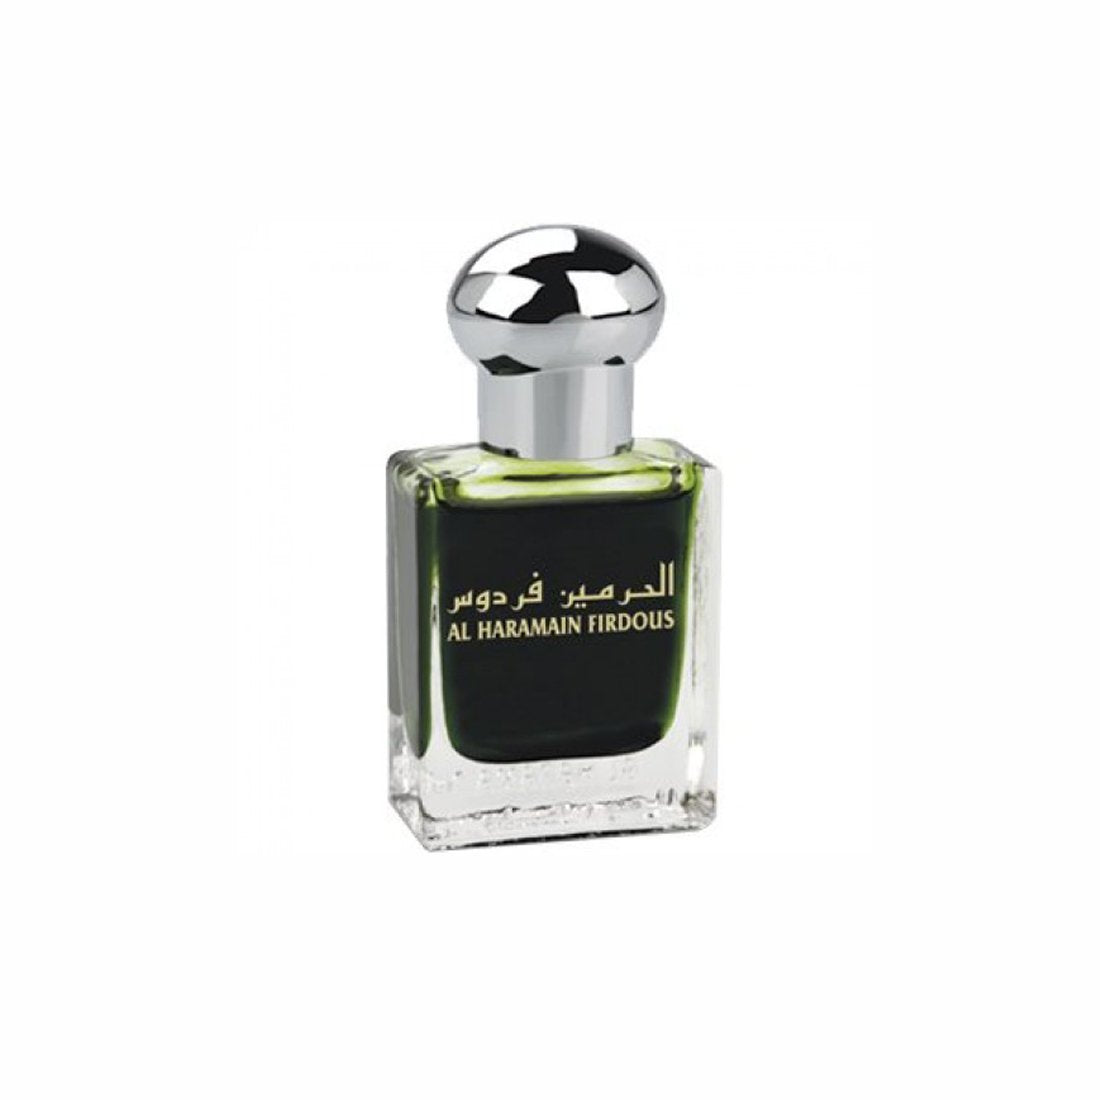 Al Haramain Firdous Fragrance Pure Original Roll on Perfume Oil (Attar) - 15 ml